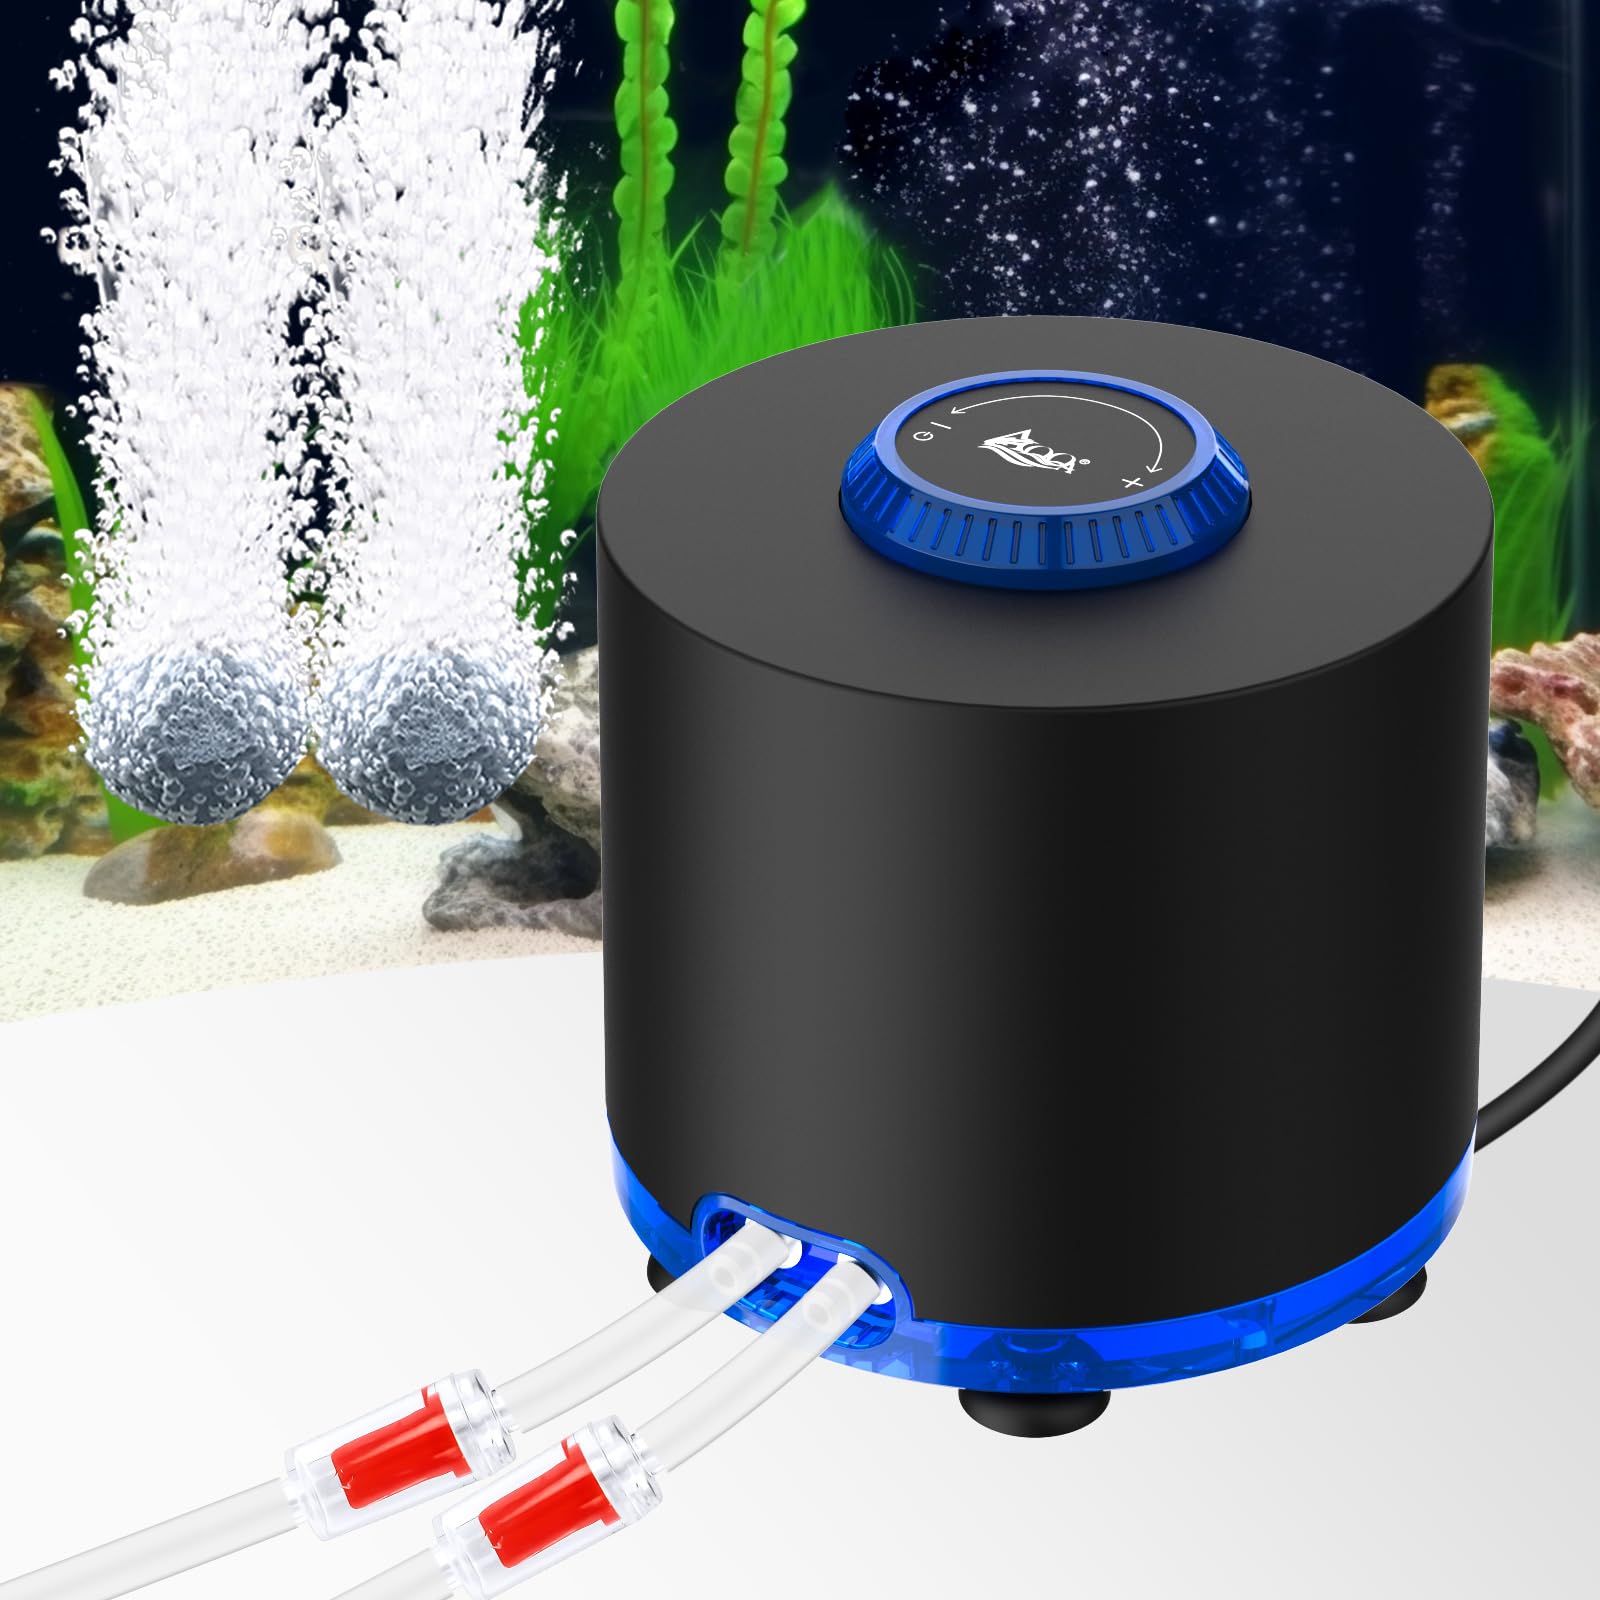 AQQA Aquarium Air Pump: Ultra-Quiet, Powerful 6W Aerator for Up to 200 Gallon Fish Tanks